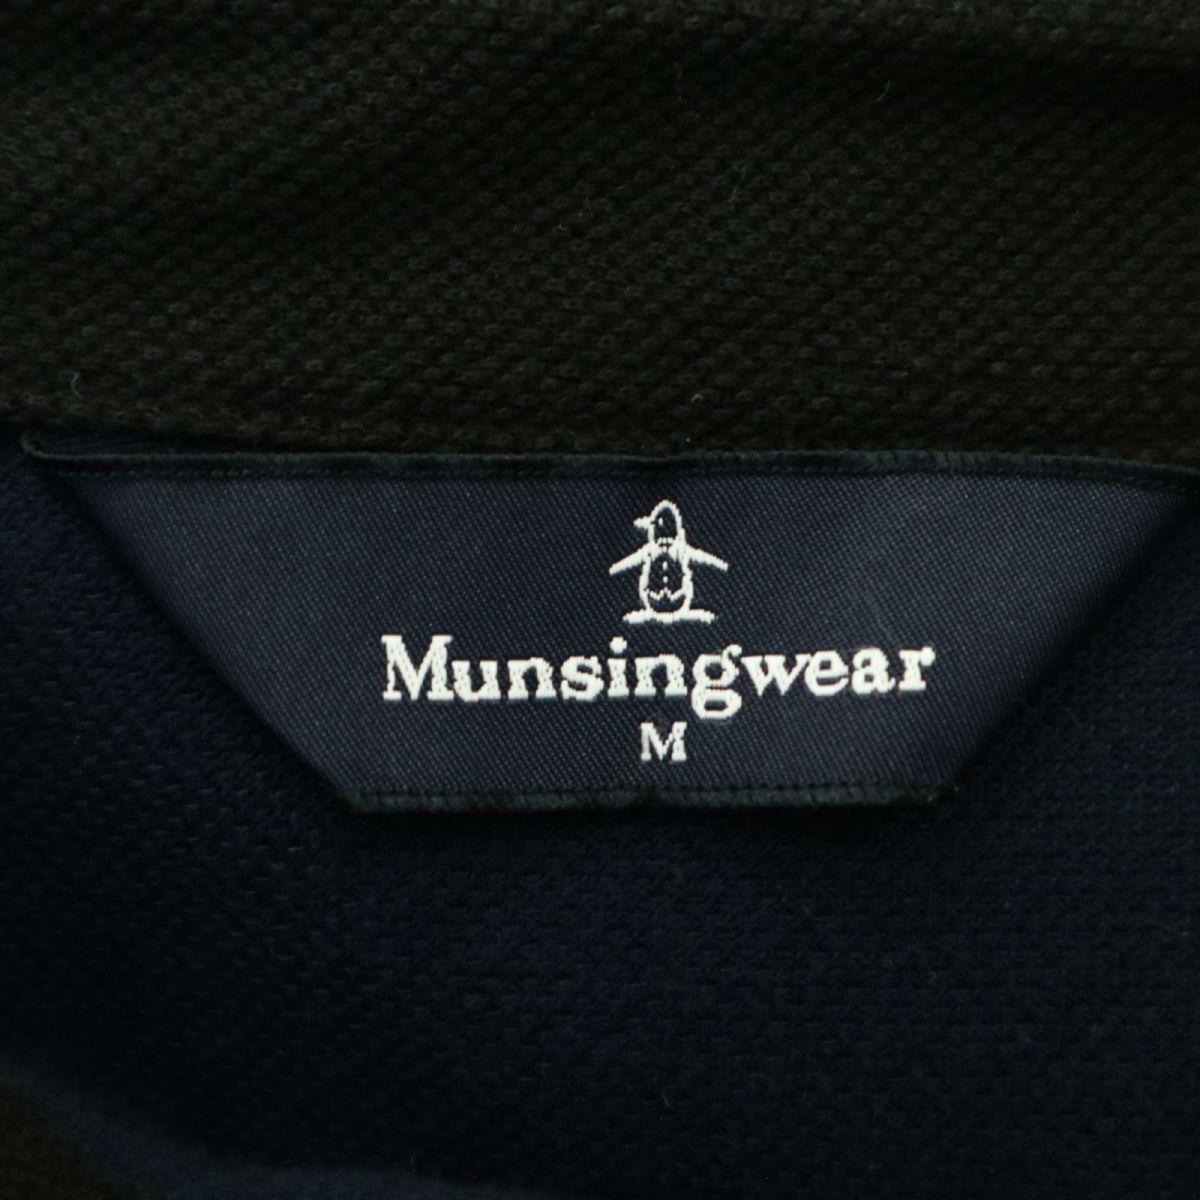 Munsingwear Munsingwear wear through year penguin embroidery * long sleeve deer. . polo-shirt Sz.M men's navy Golf A4T03575_4#C